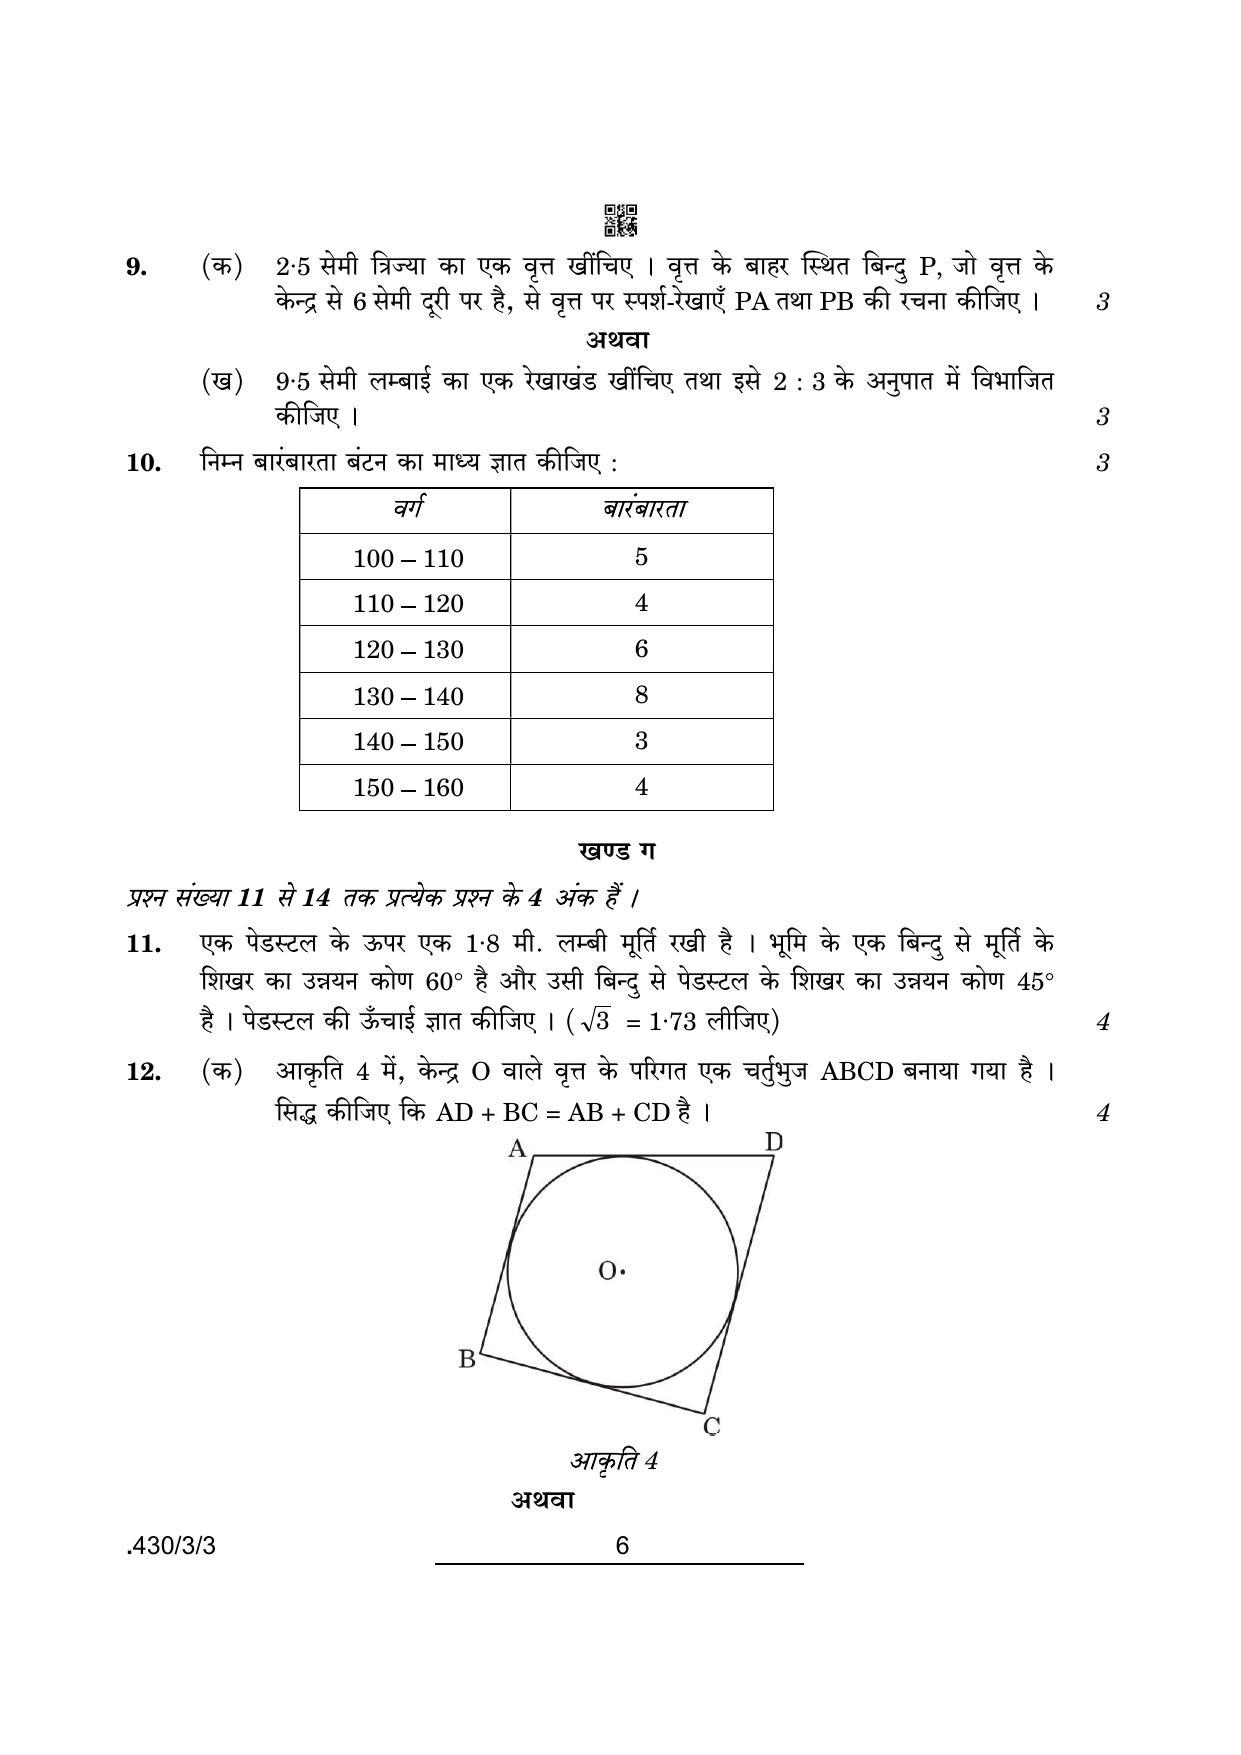 CBSE Class 10 Maths Basic (430/3/3 - SET 3) 2022 Question Paper - Page 6